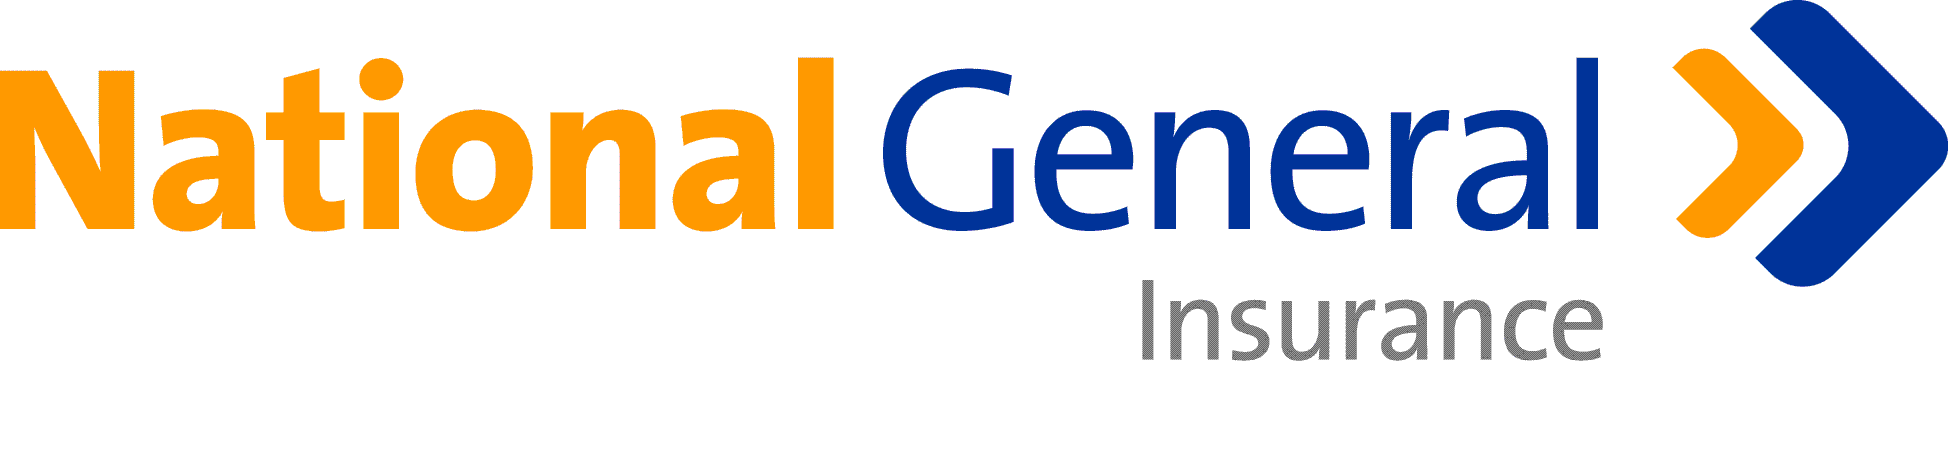 National-General-Insurance-Company-logo